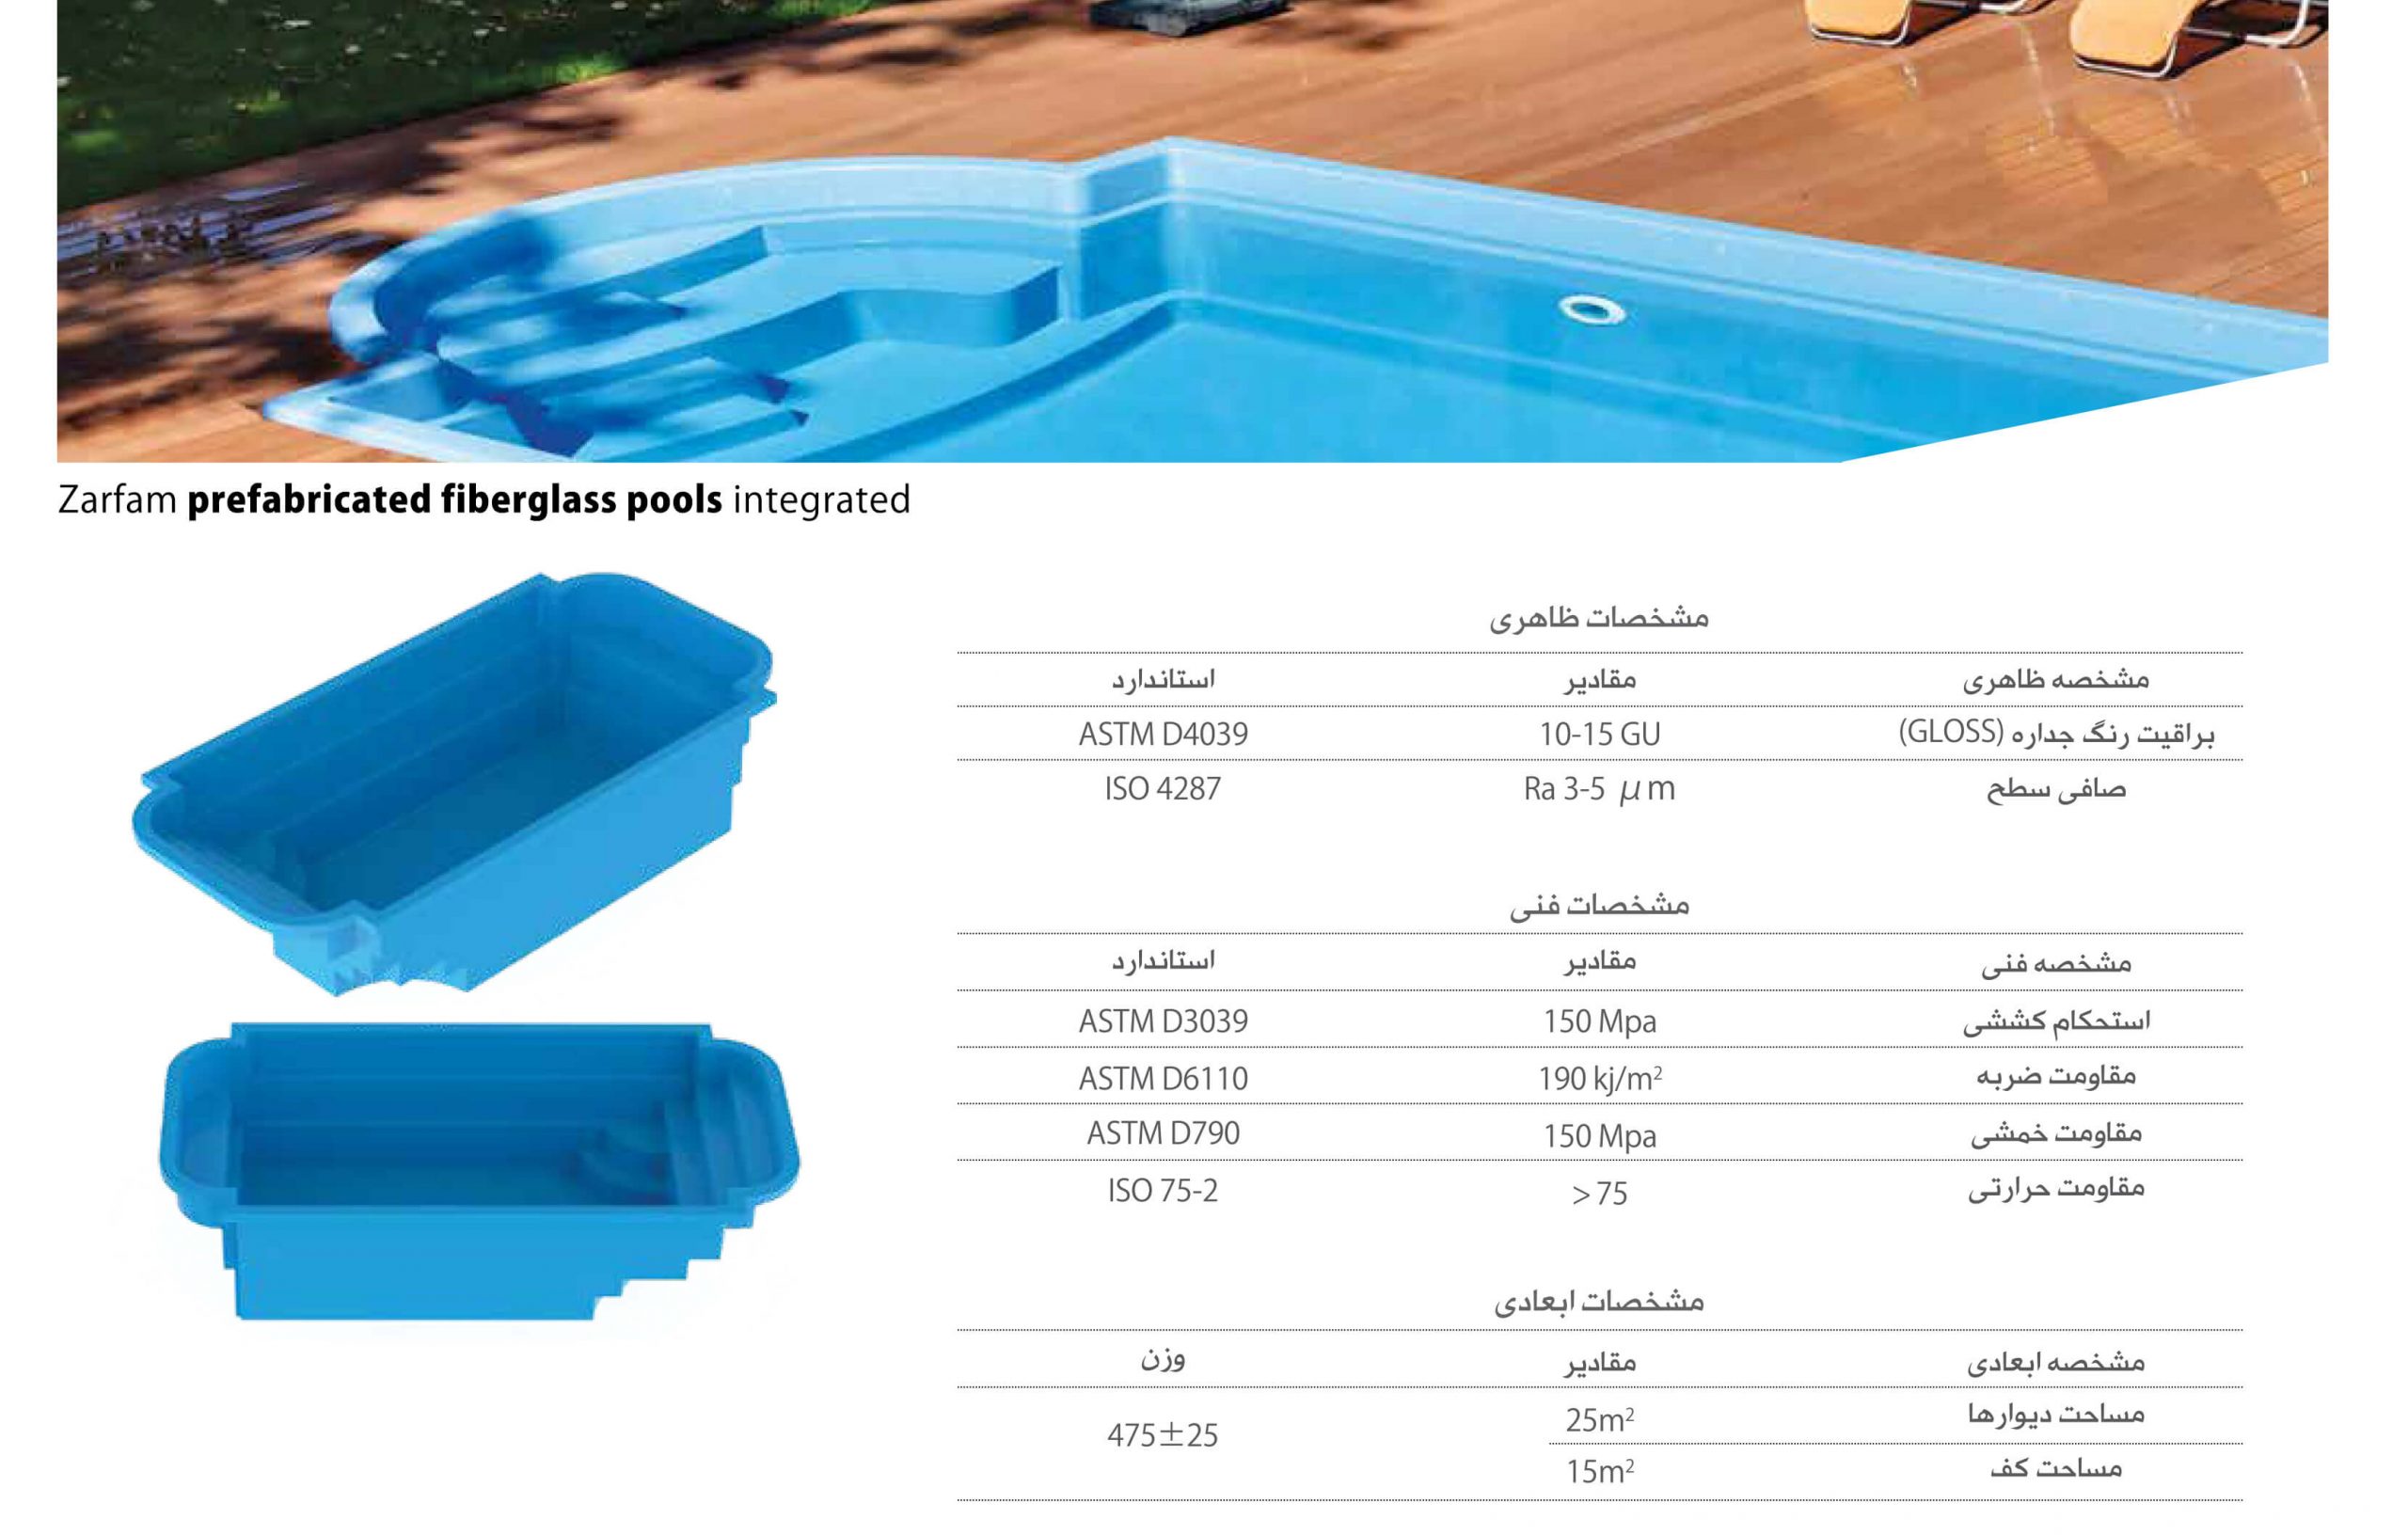 zarfampool prefabricatedpool 18000 liters 0 scaled - استخر فایبرگلاس پیش ساخته 3*6 زرفام ۱۸۰۰۰ لیتری -  - outdoor, pools-pool-supplies, above-ground-pools